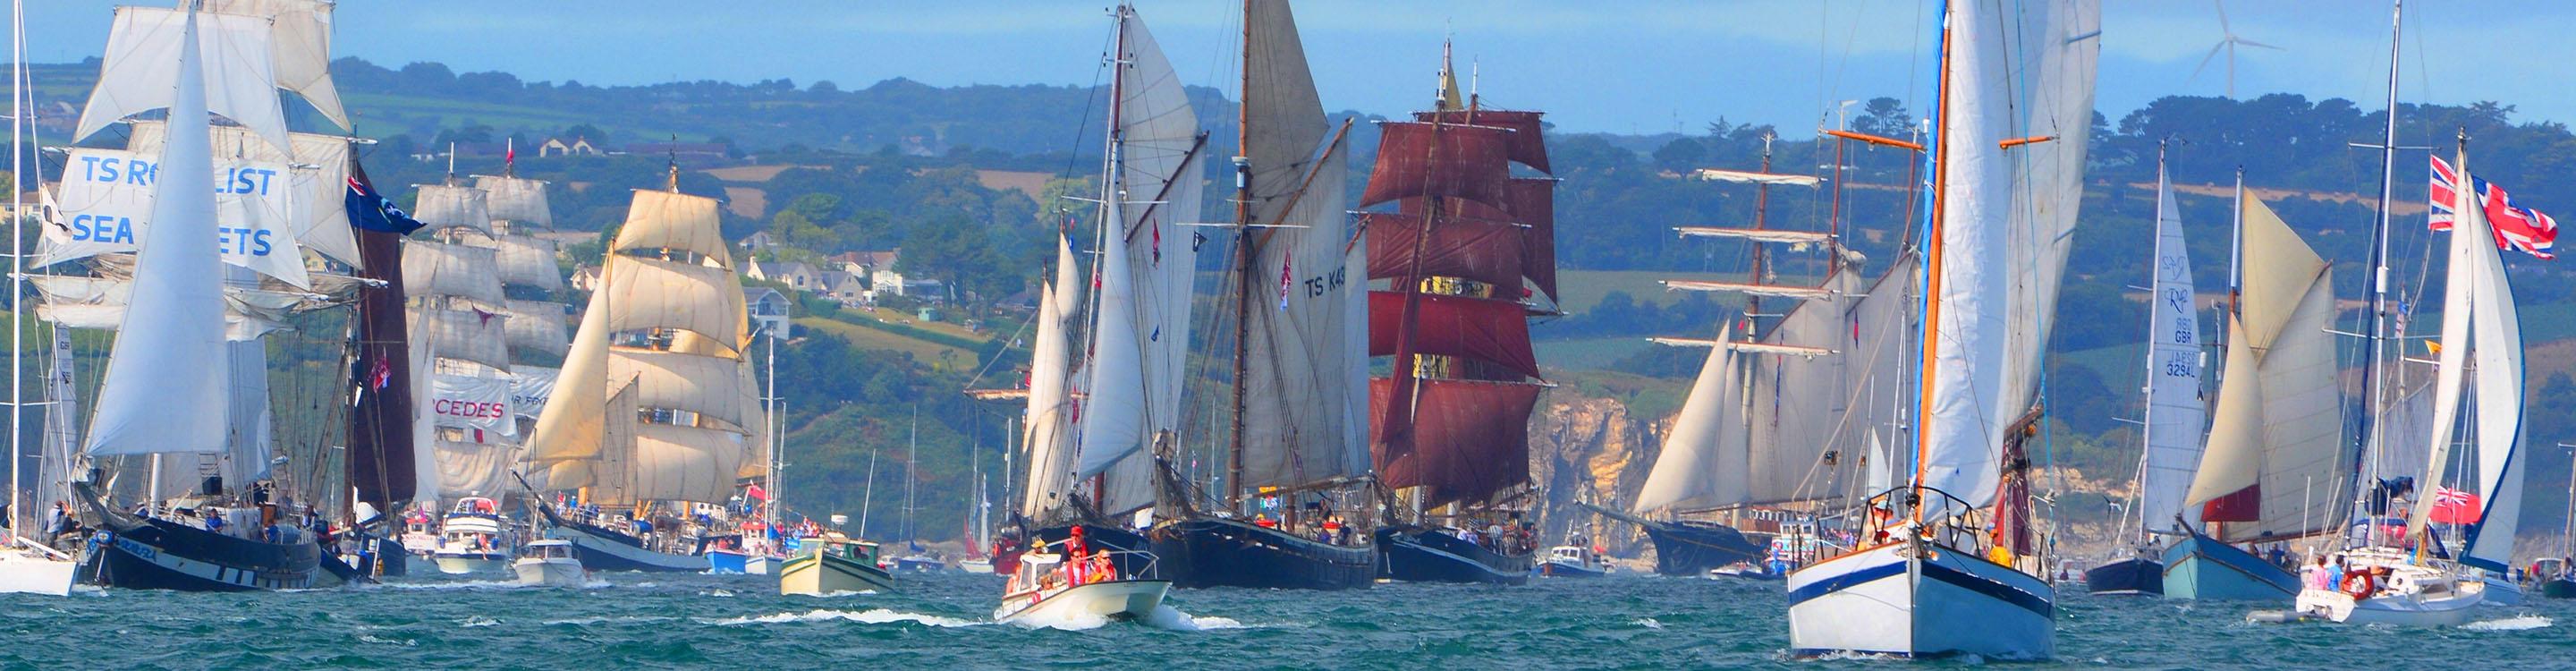 Scenes from the Falmouth Tall Ships Regatta